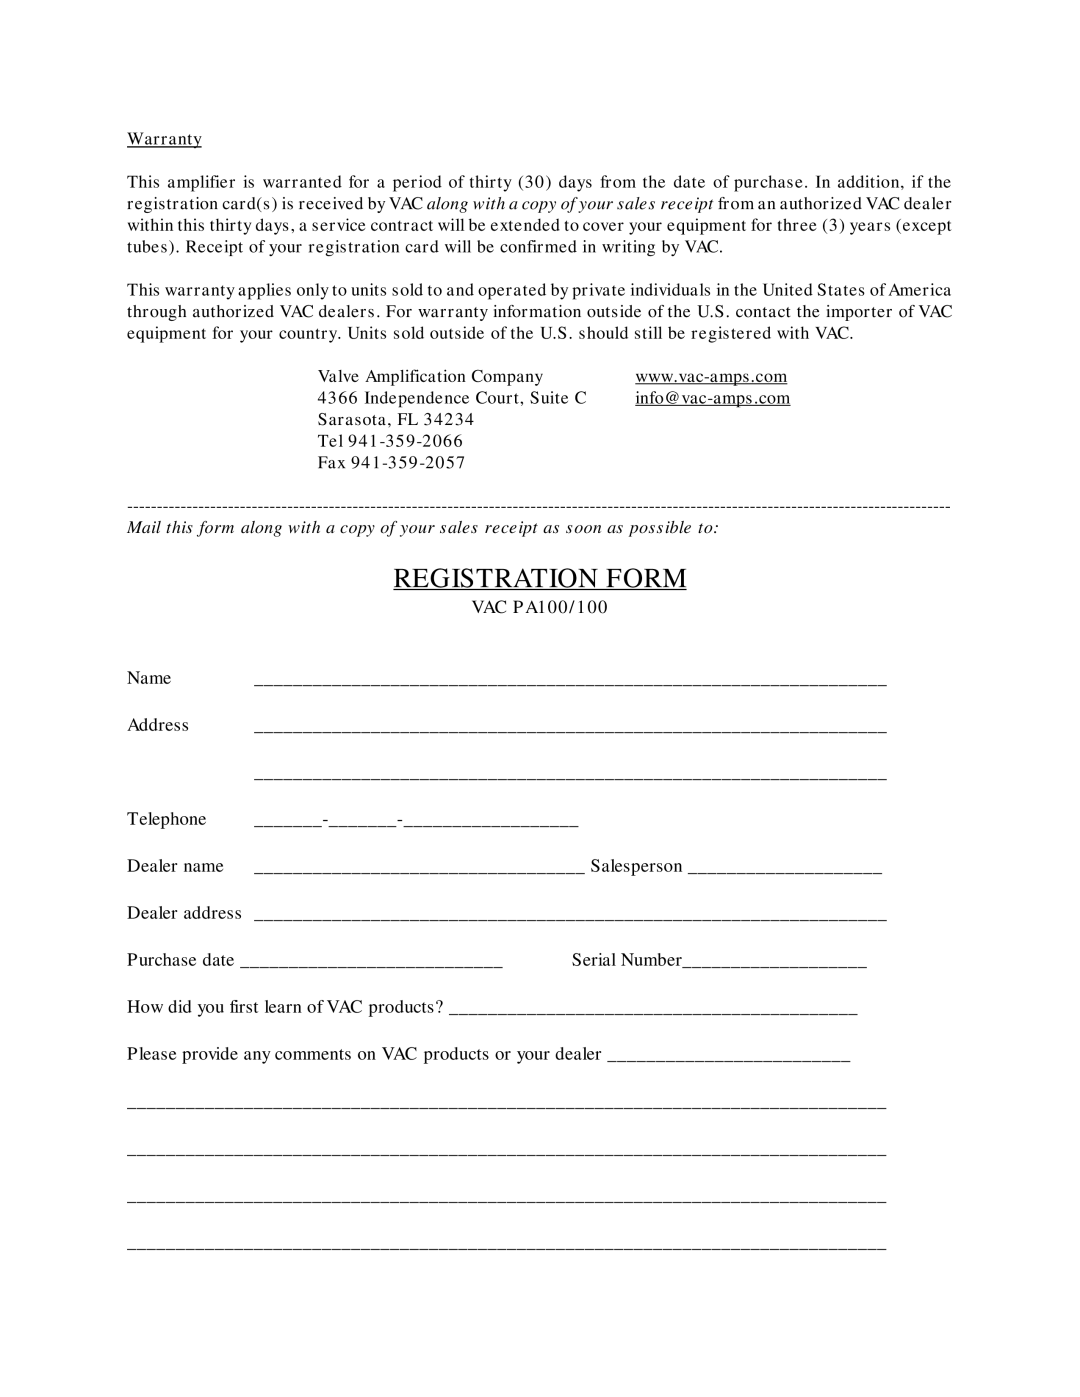 Mazda VAC PA100/100 user service Registration Form 